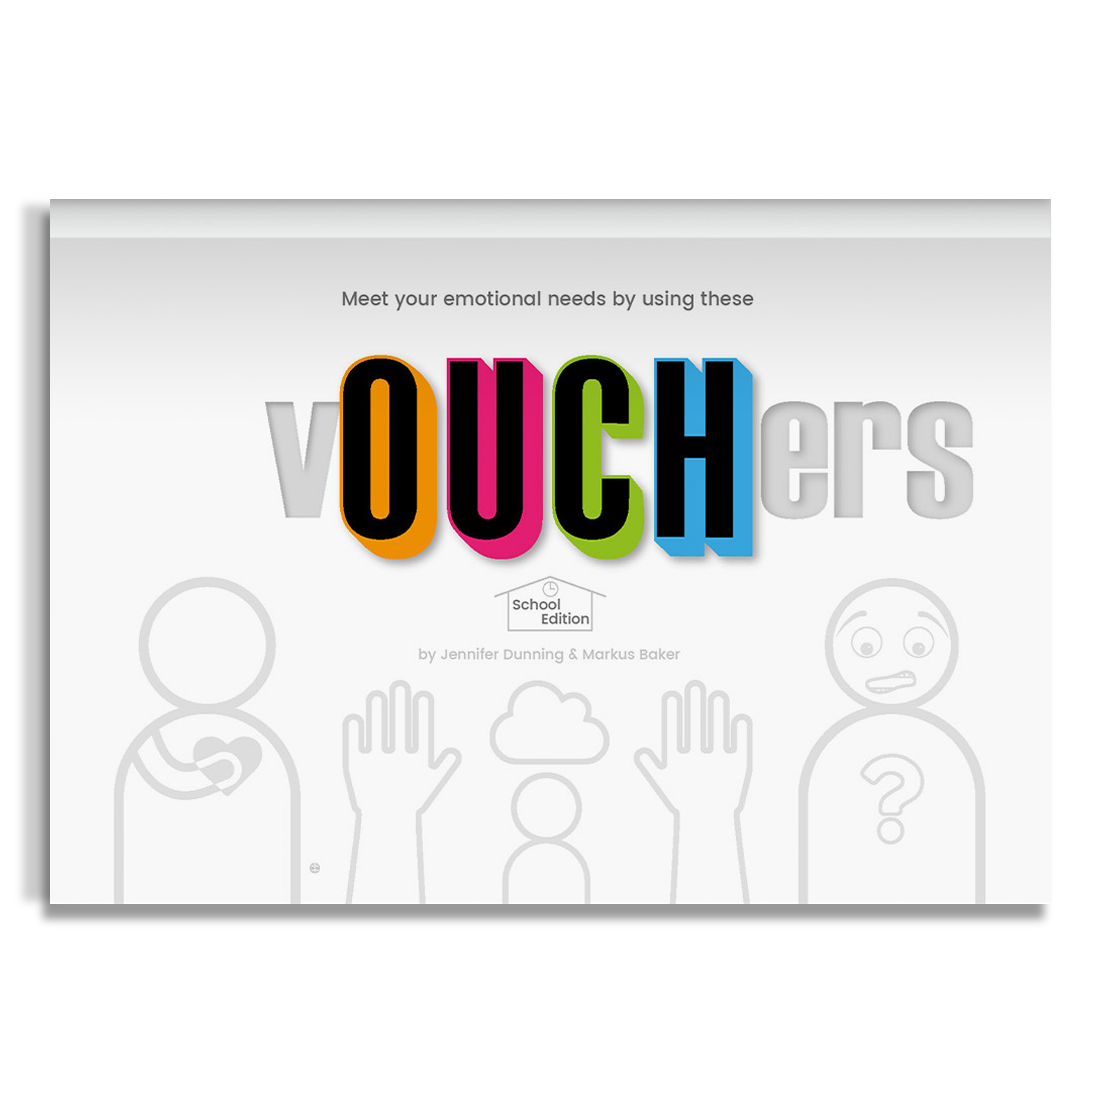 vOUCHers - School Edition